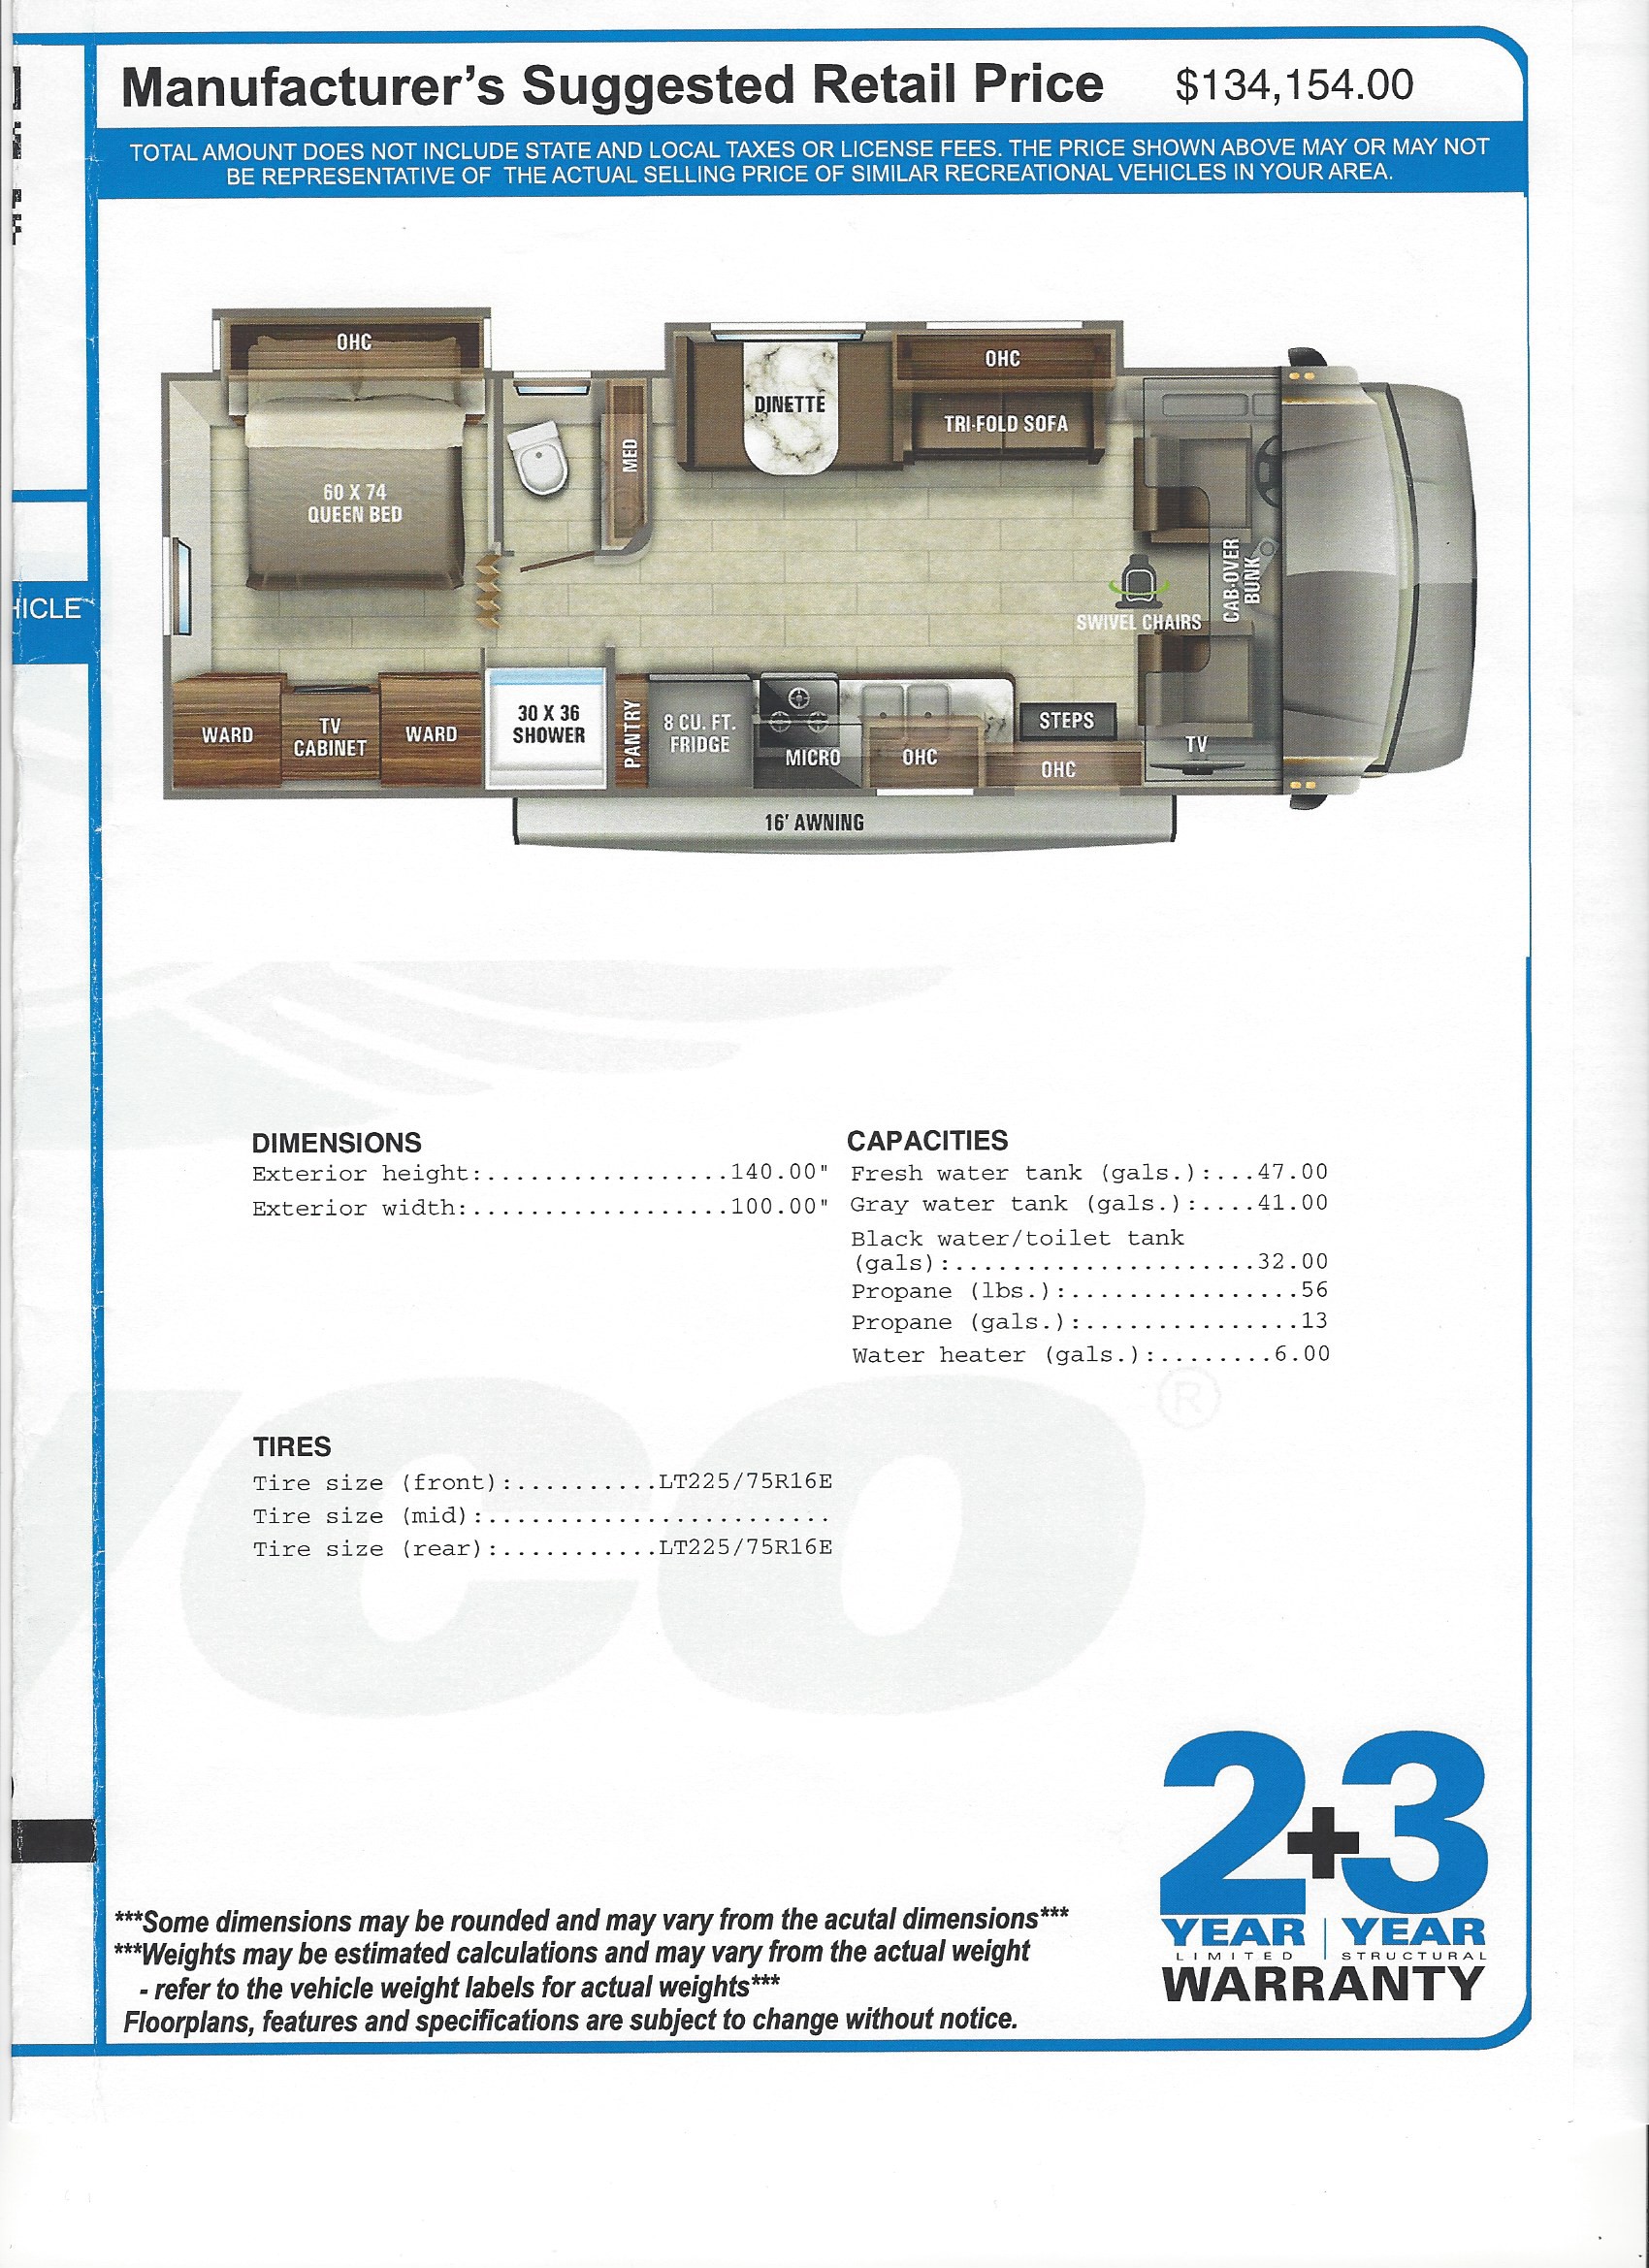 2021 Jayco Greyhawk 29MV MSRP Sheet